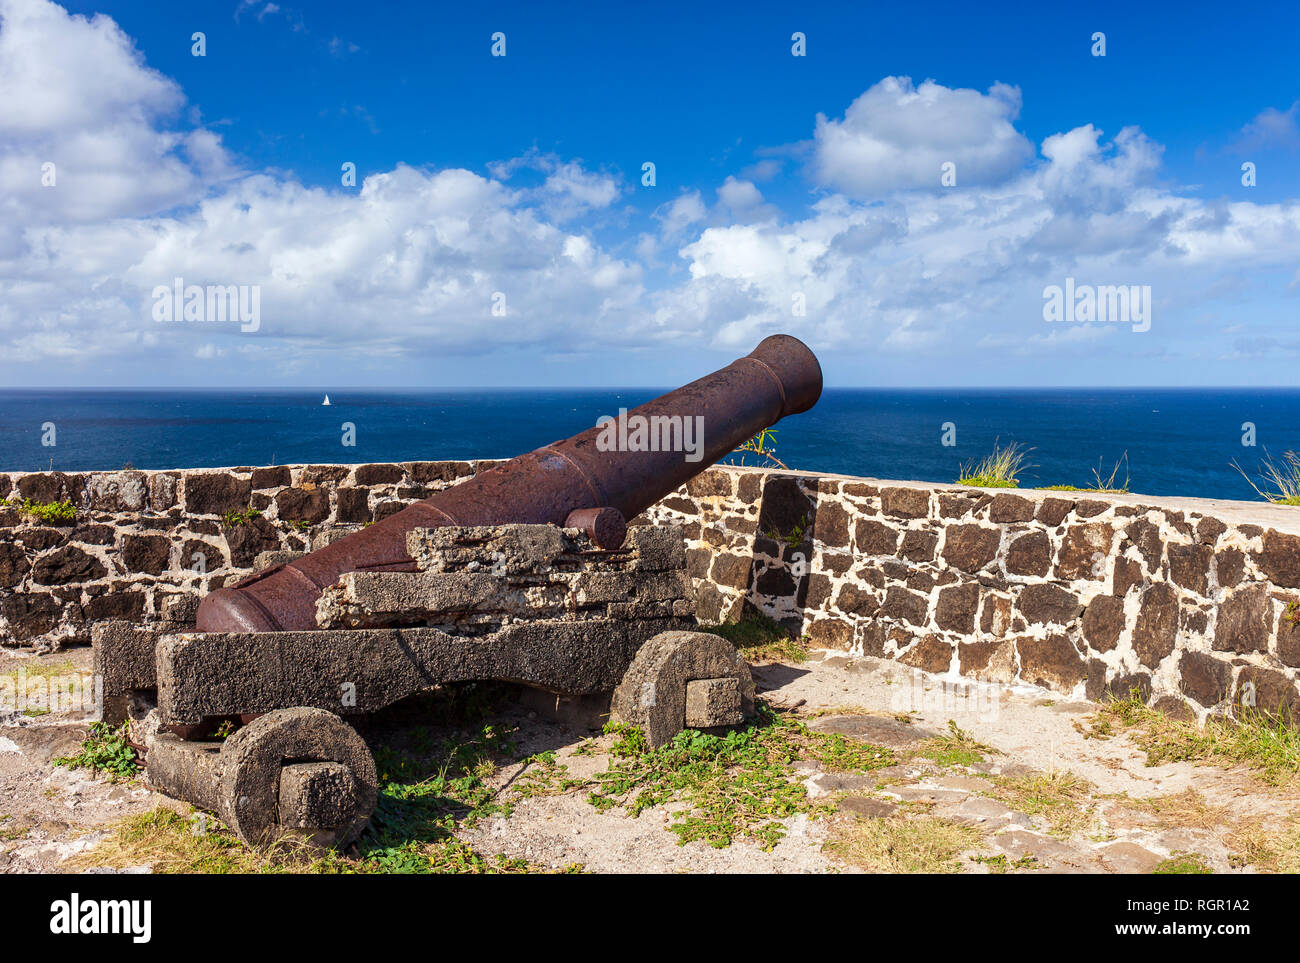 Cannon. Fort Rodney, Pigeon Island, Gros Islet, Saint Lucia, Caribbean. Stock Photo